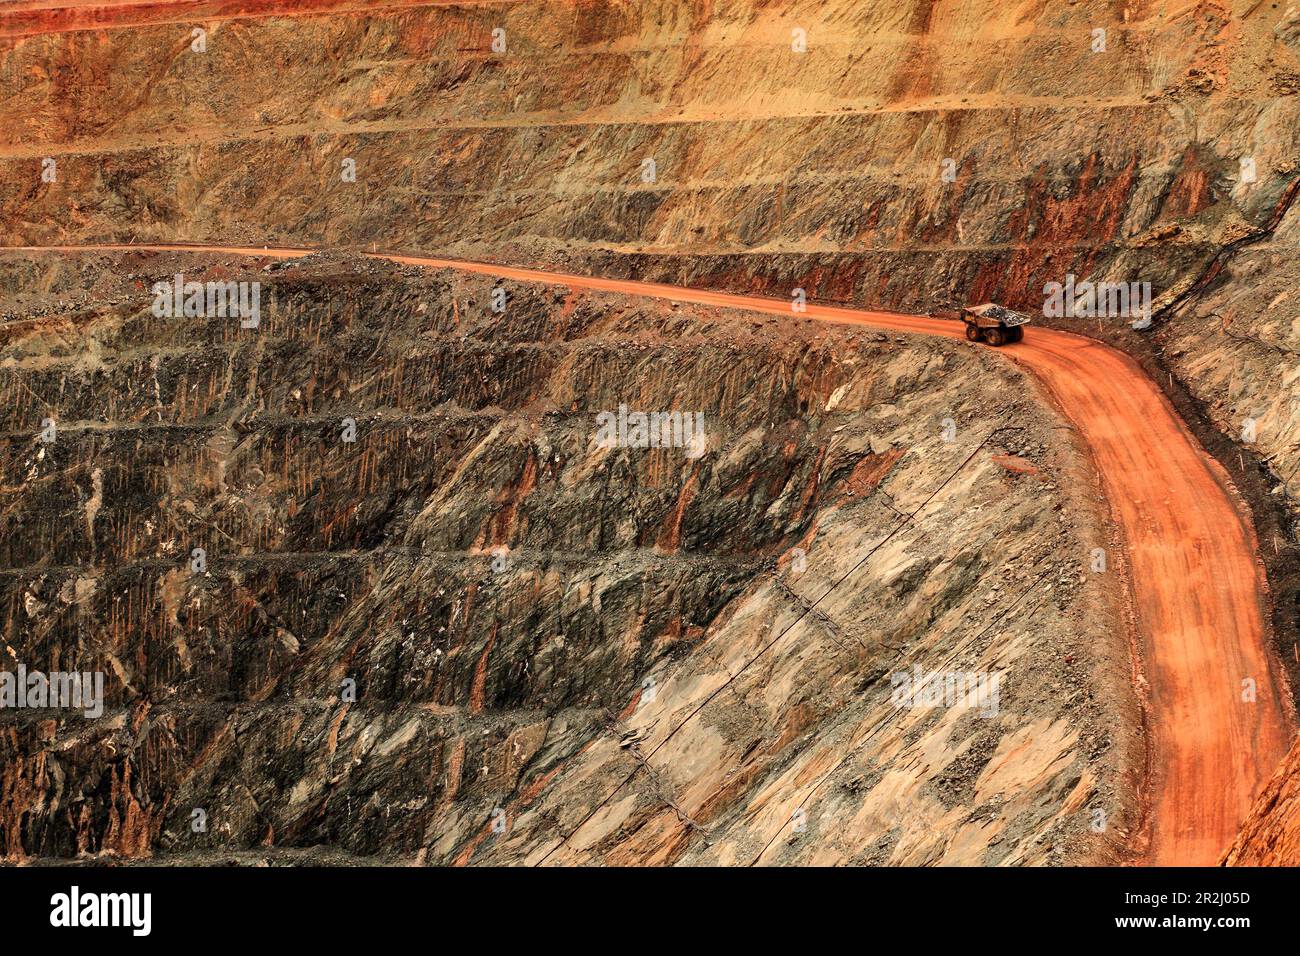 Open cut gold mine haul road, Gwalia, Western Australia Stock Photo